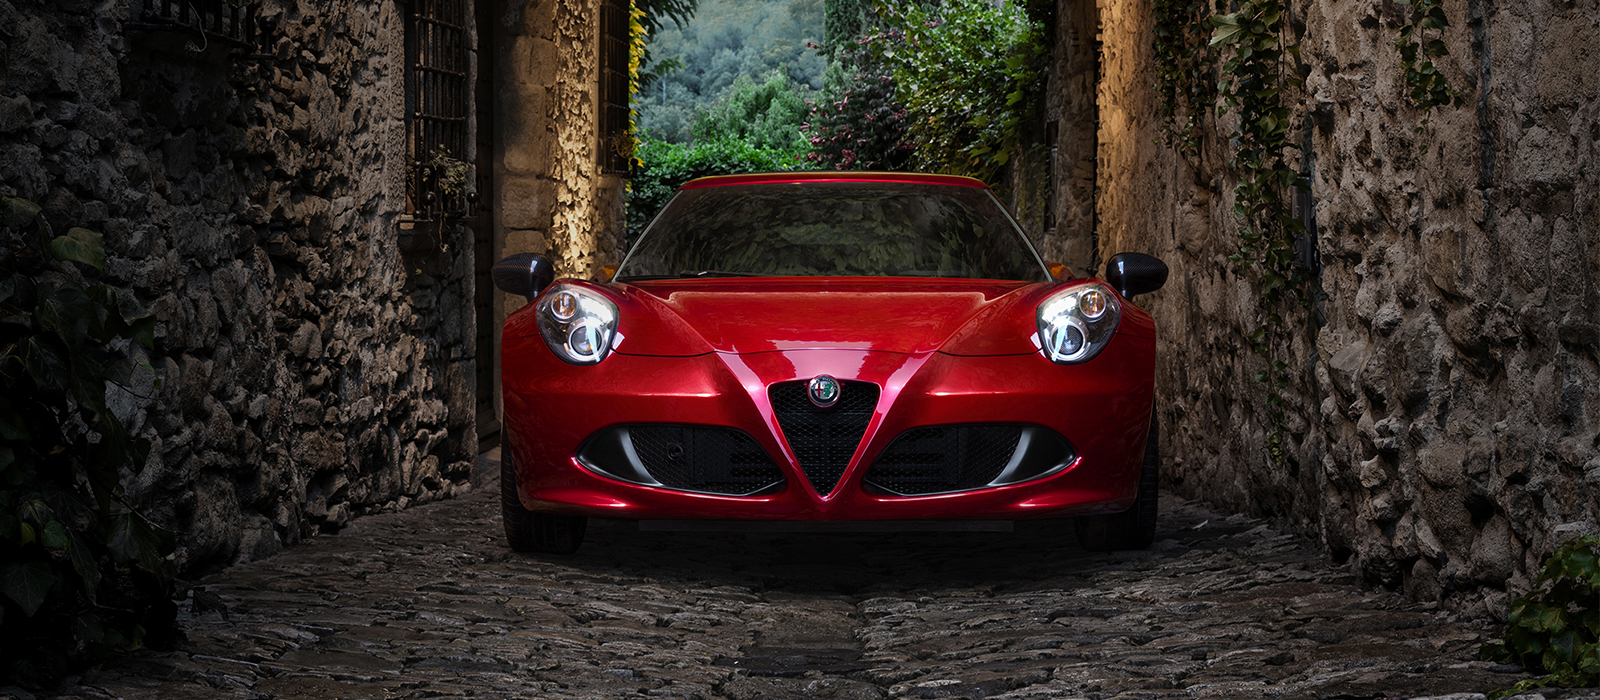 Amazing Alfa Romeo 4C Pictures & Backgrounds